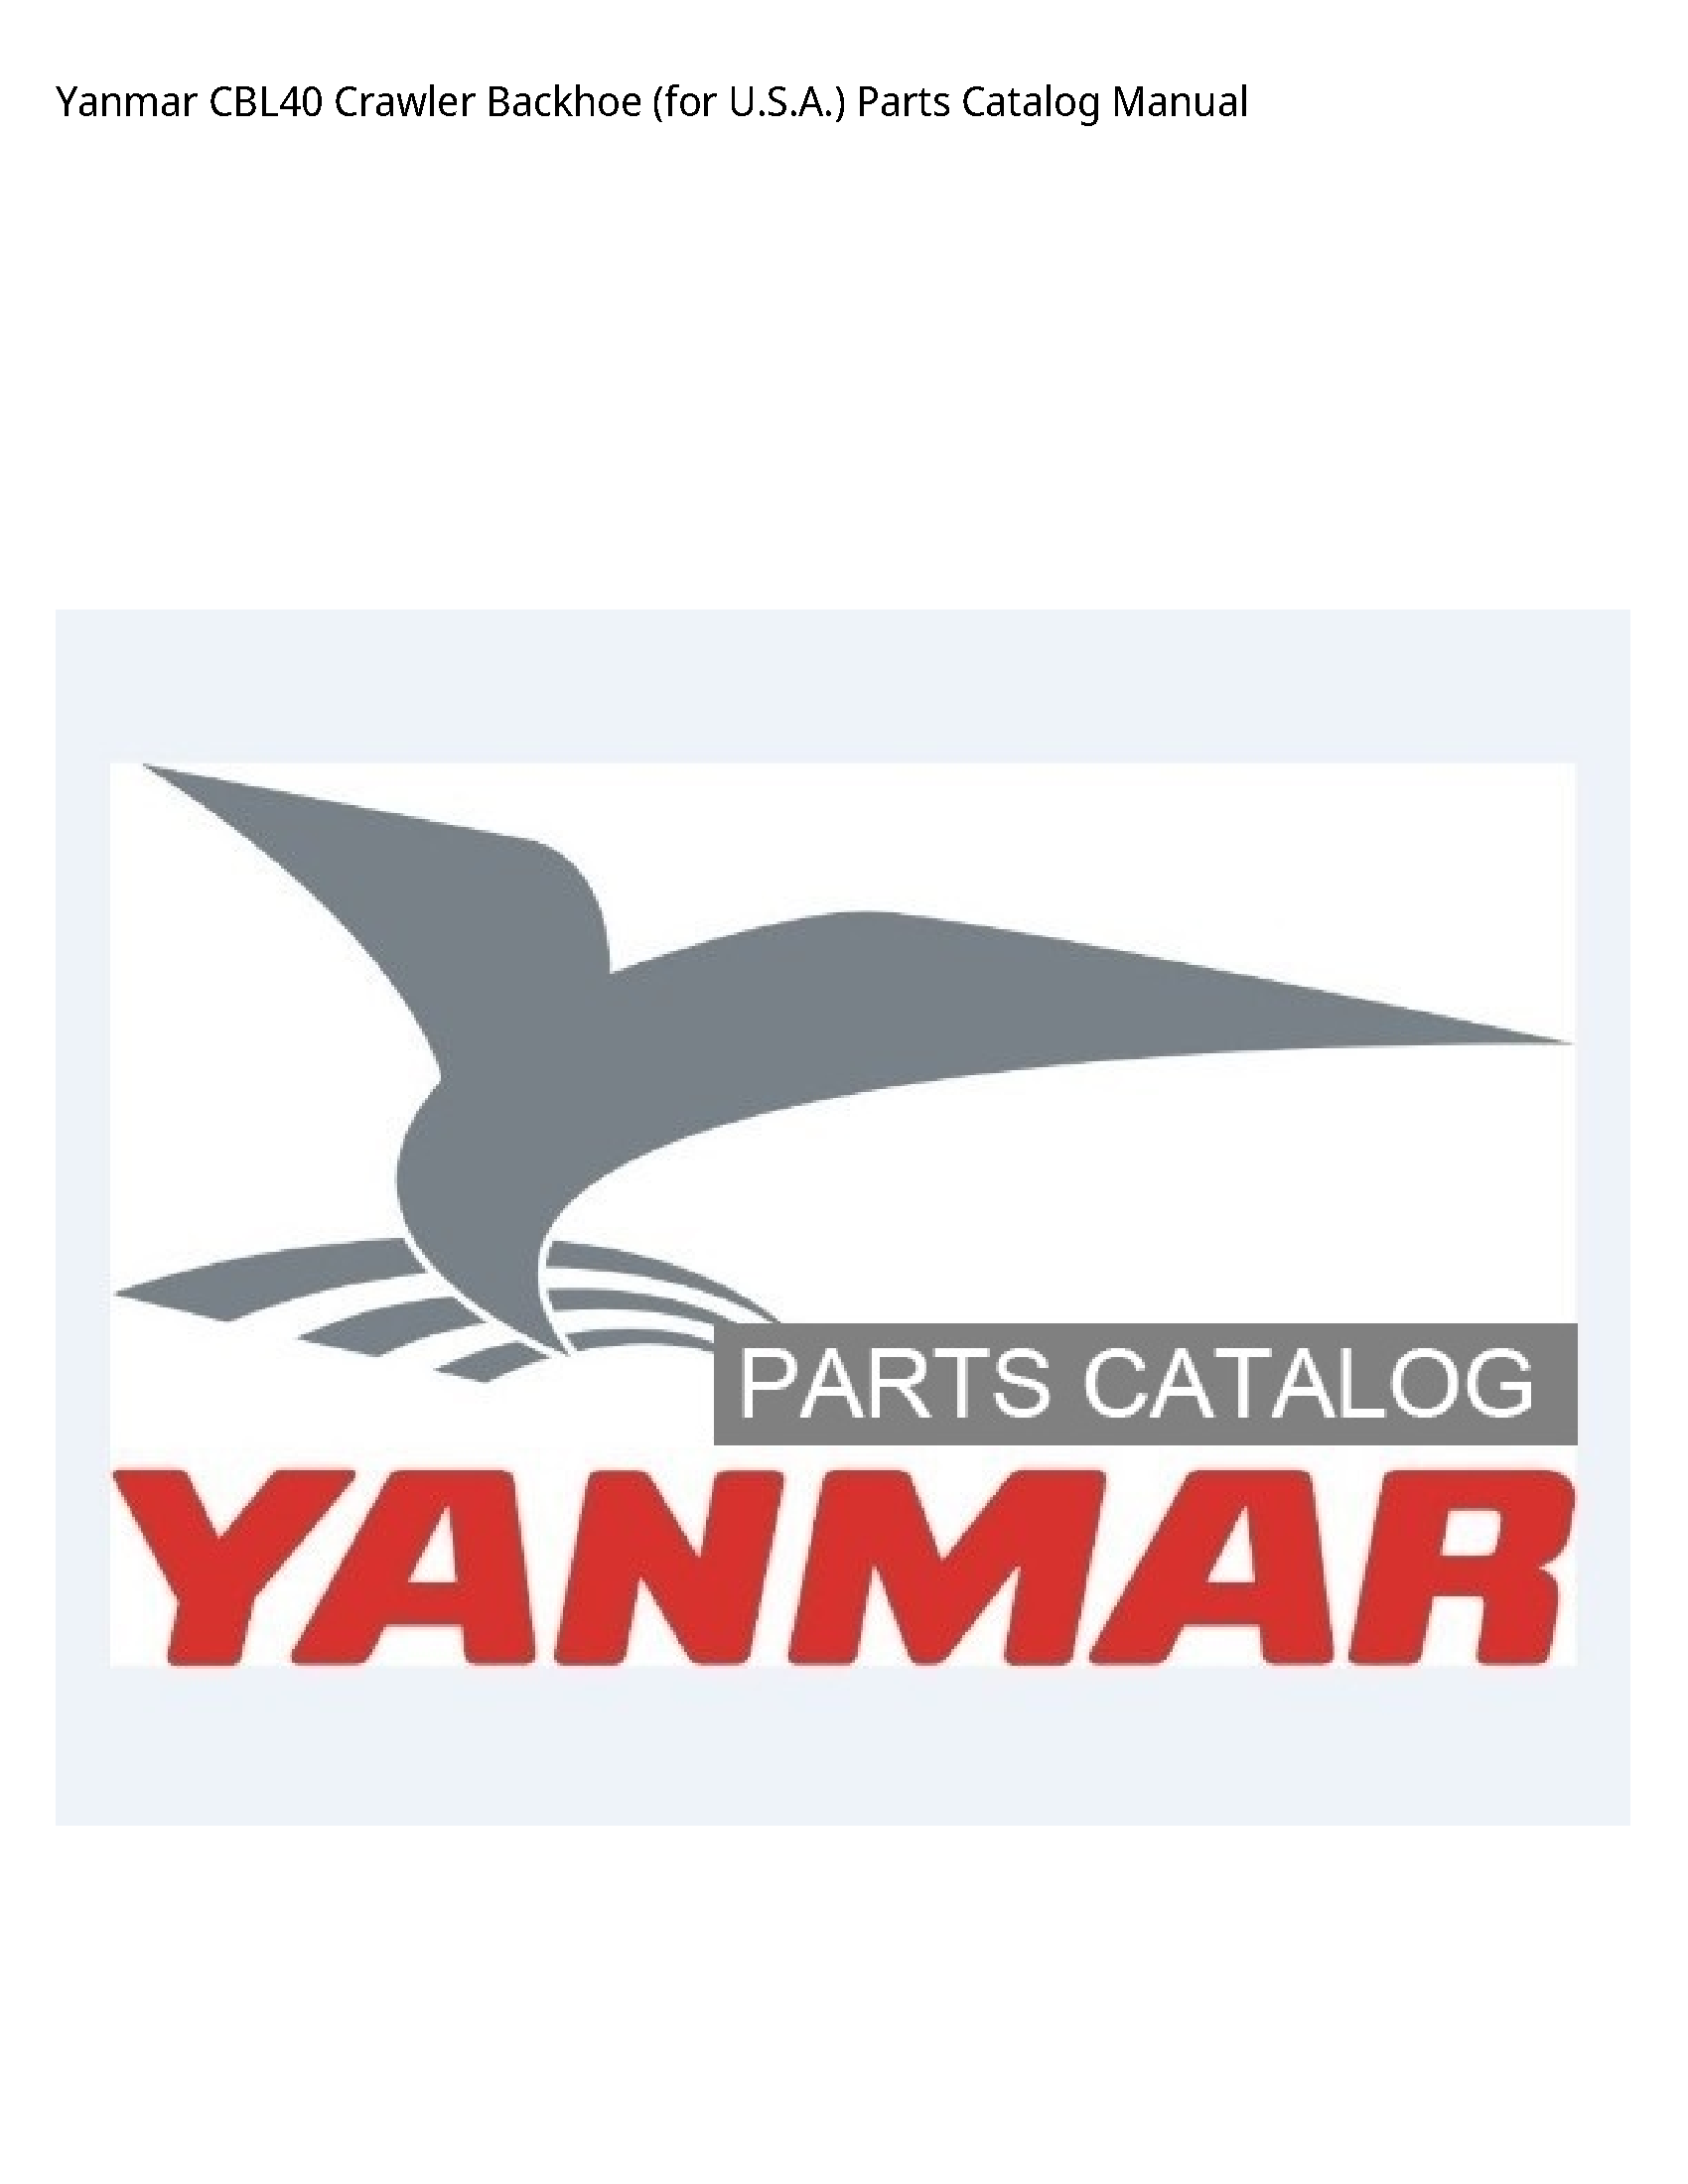 Yanmar CBL40 Crawler Backhoe (for U.S.A.) Parts Catalog manual